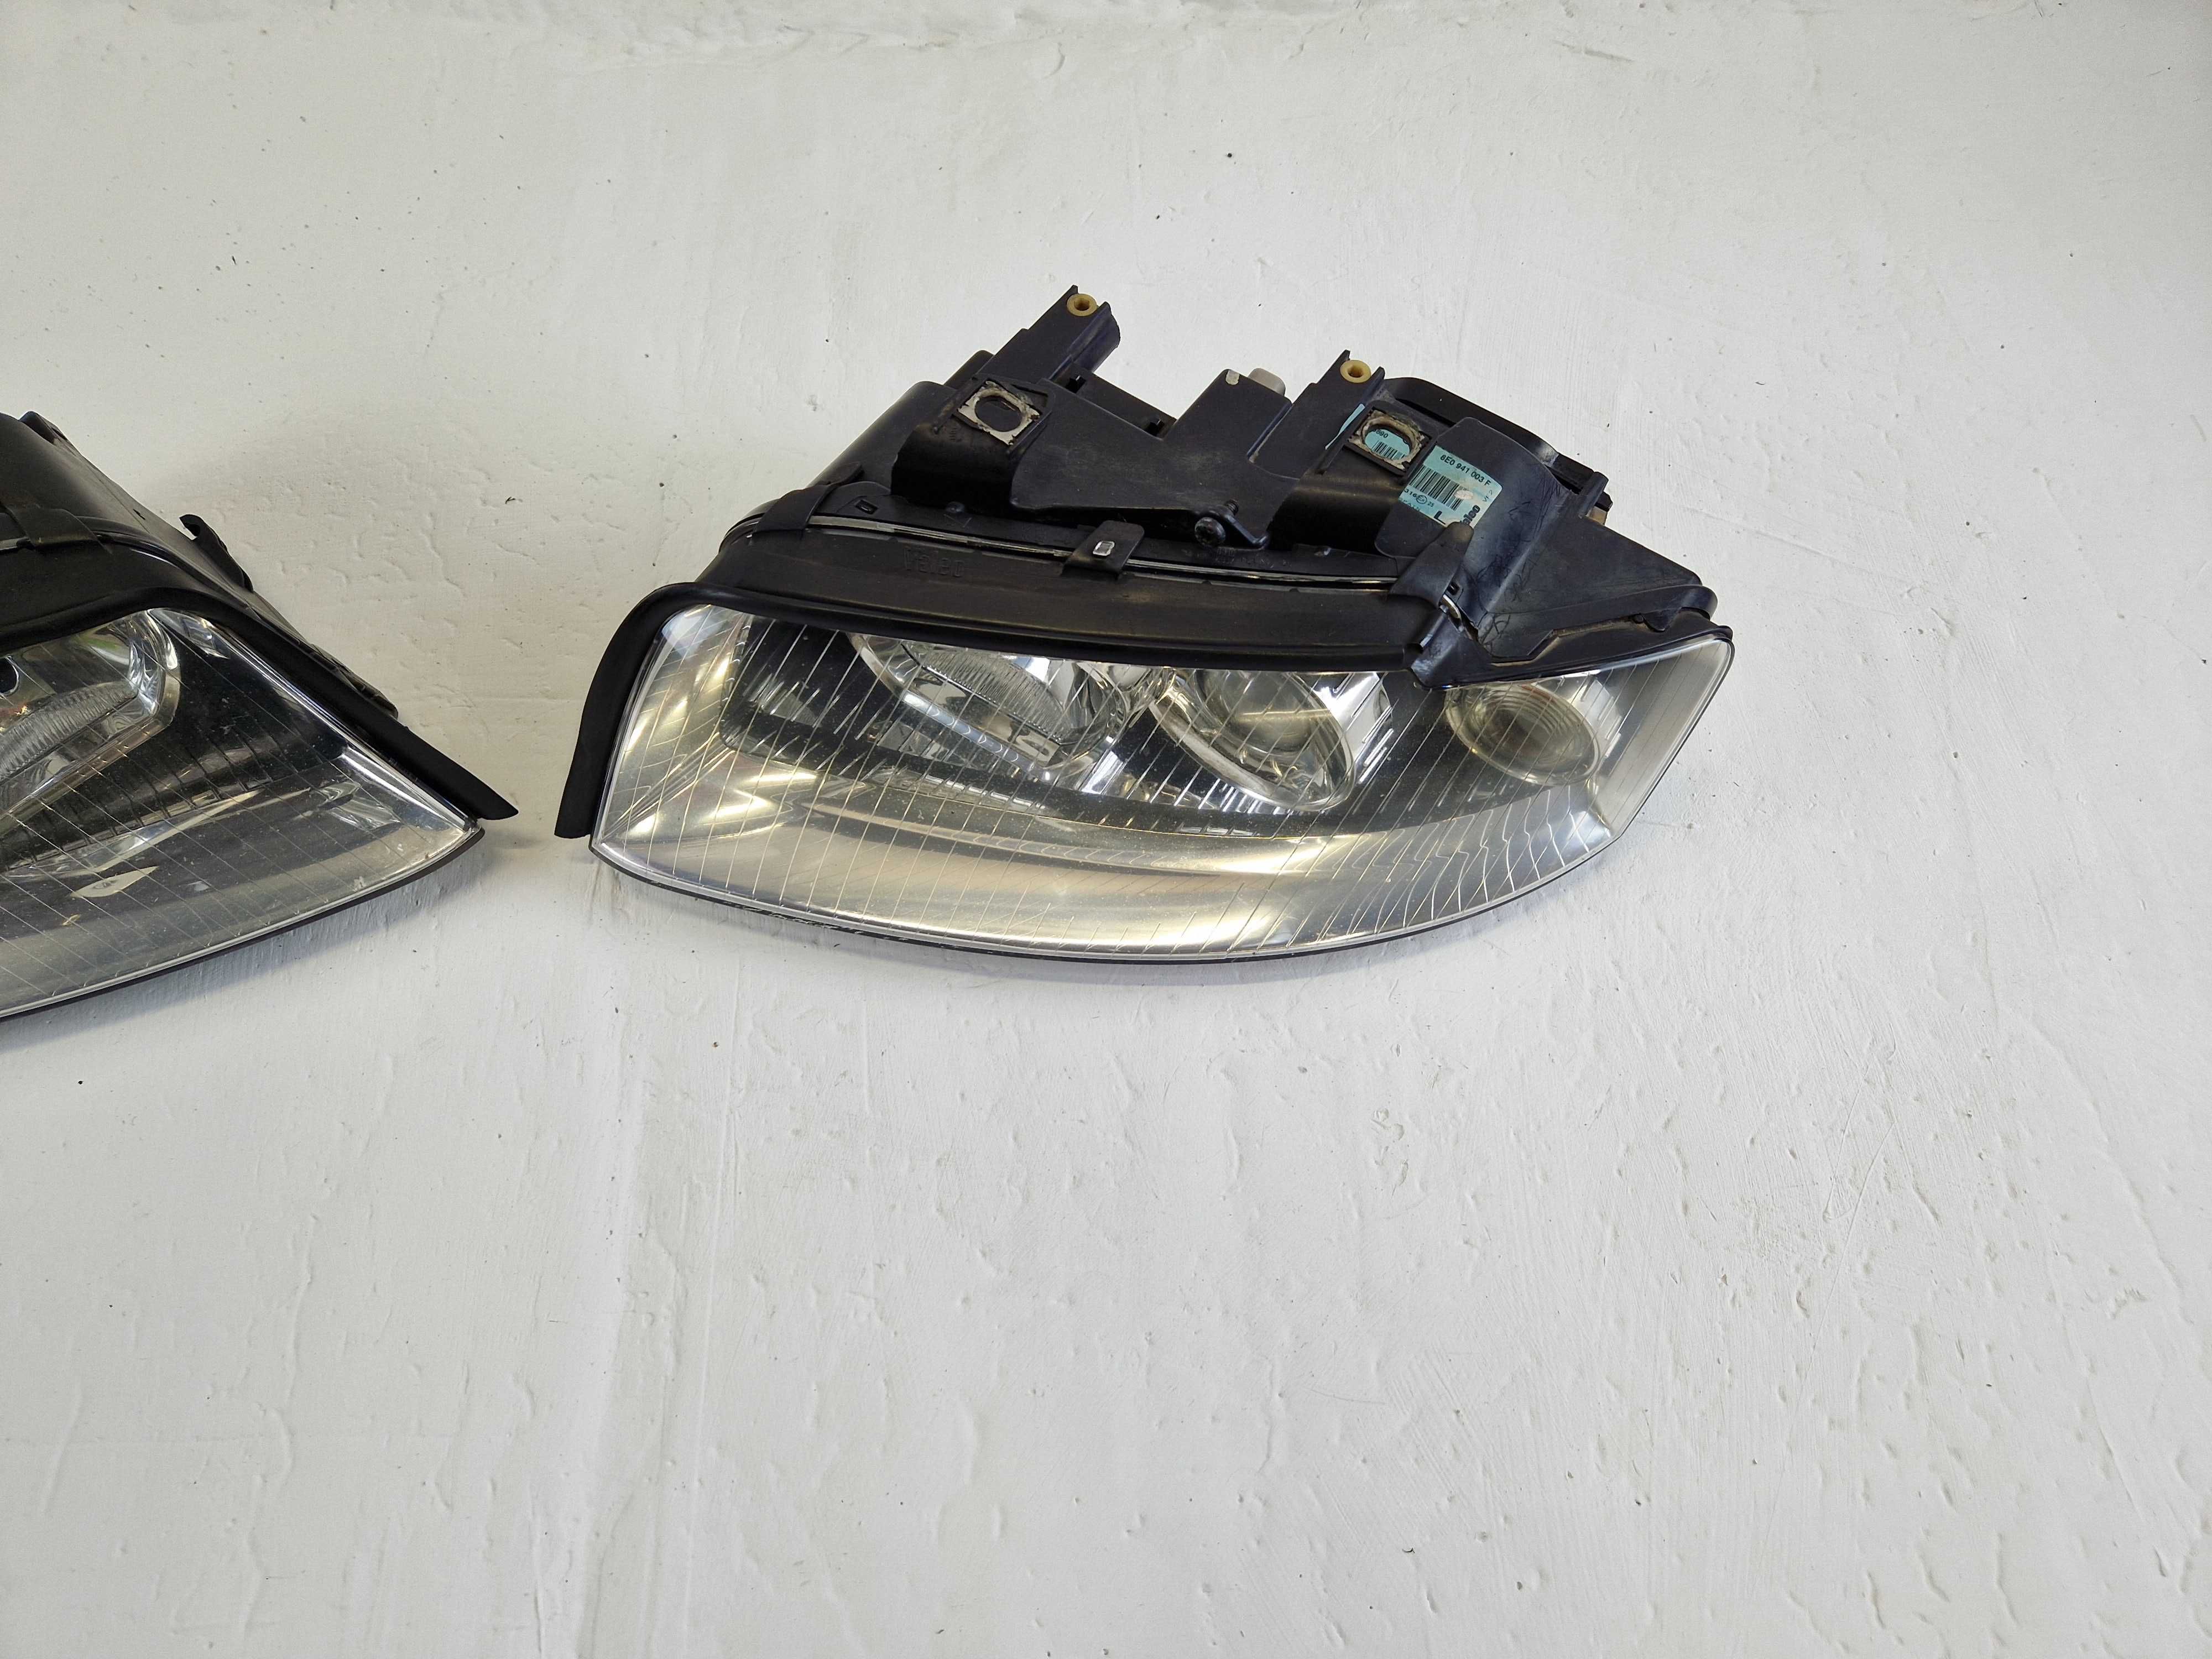 Komplet Lampy Reflektory Lampa Audi A4 B6 Przód Przednie 00-05r Europa